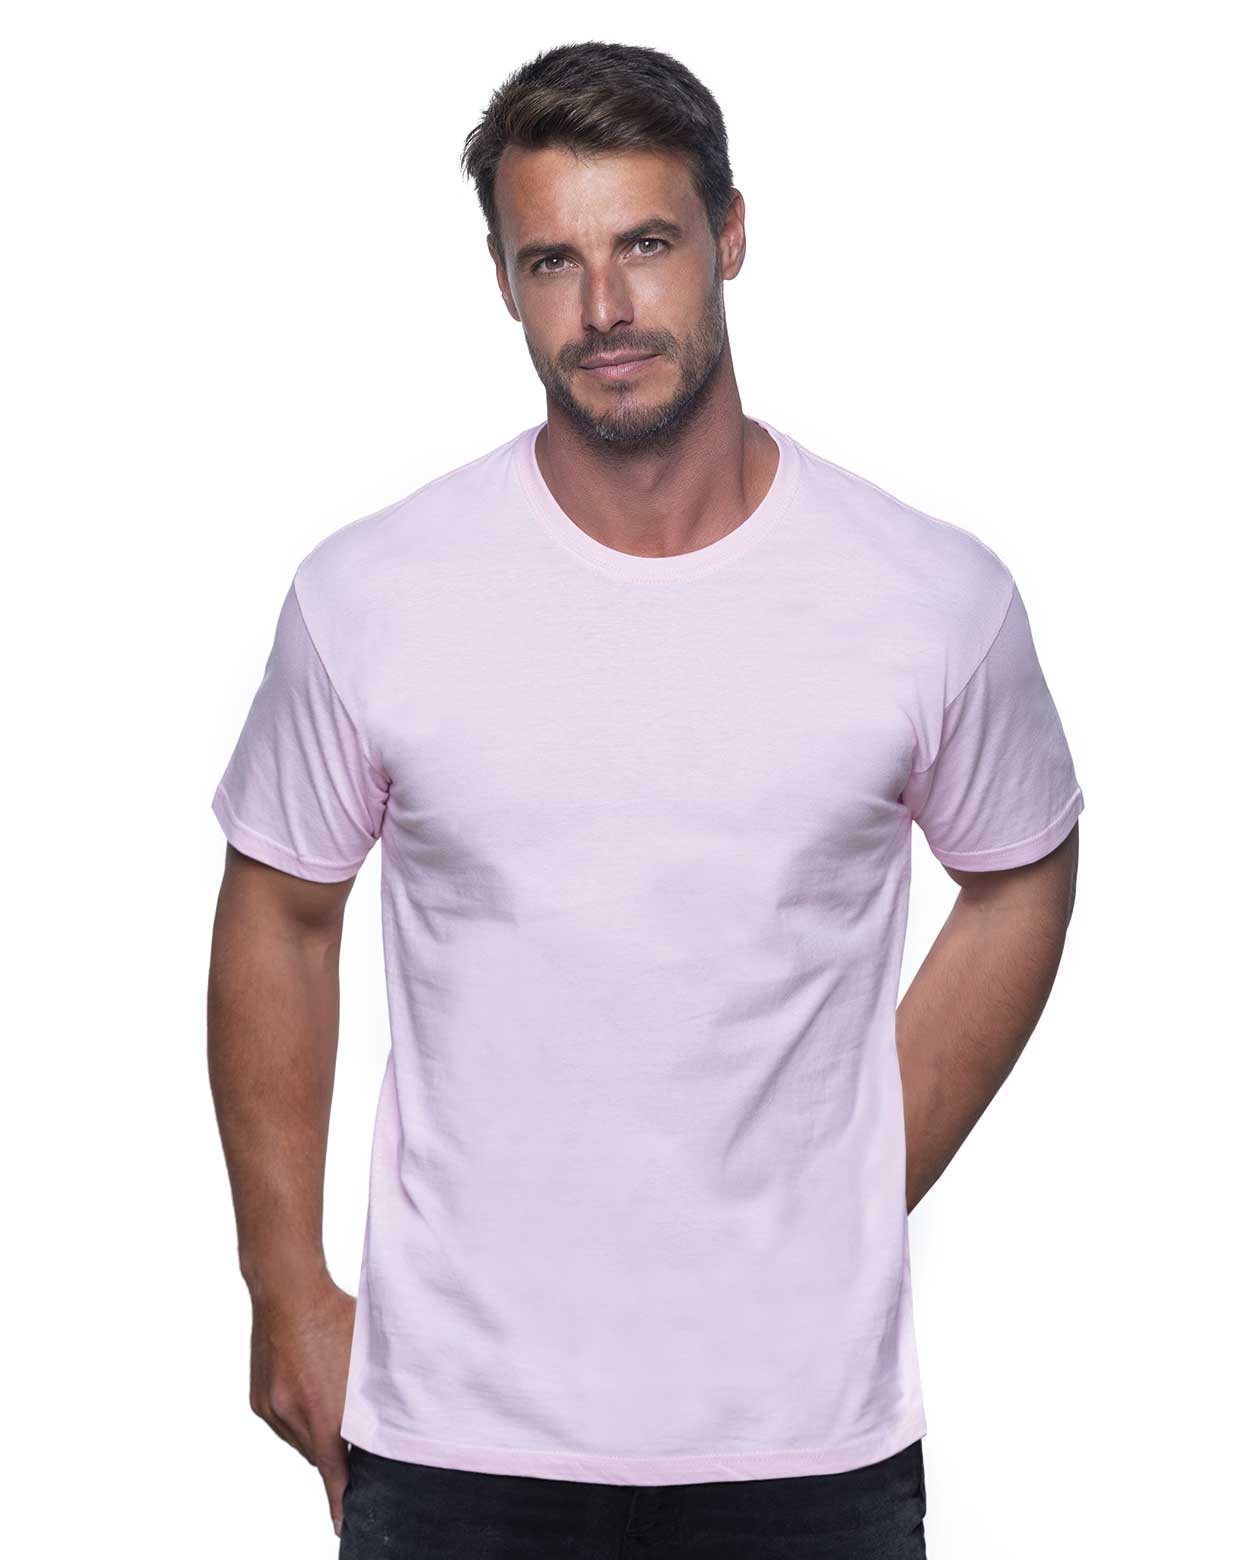 Camiseta JHK T-Shirt Blanco S-XXL 100% Cotton Algodon